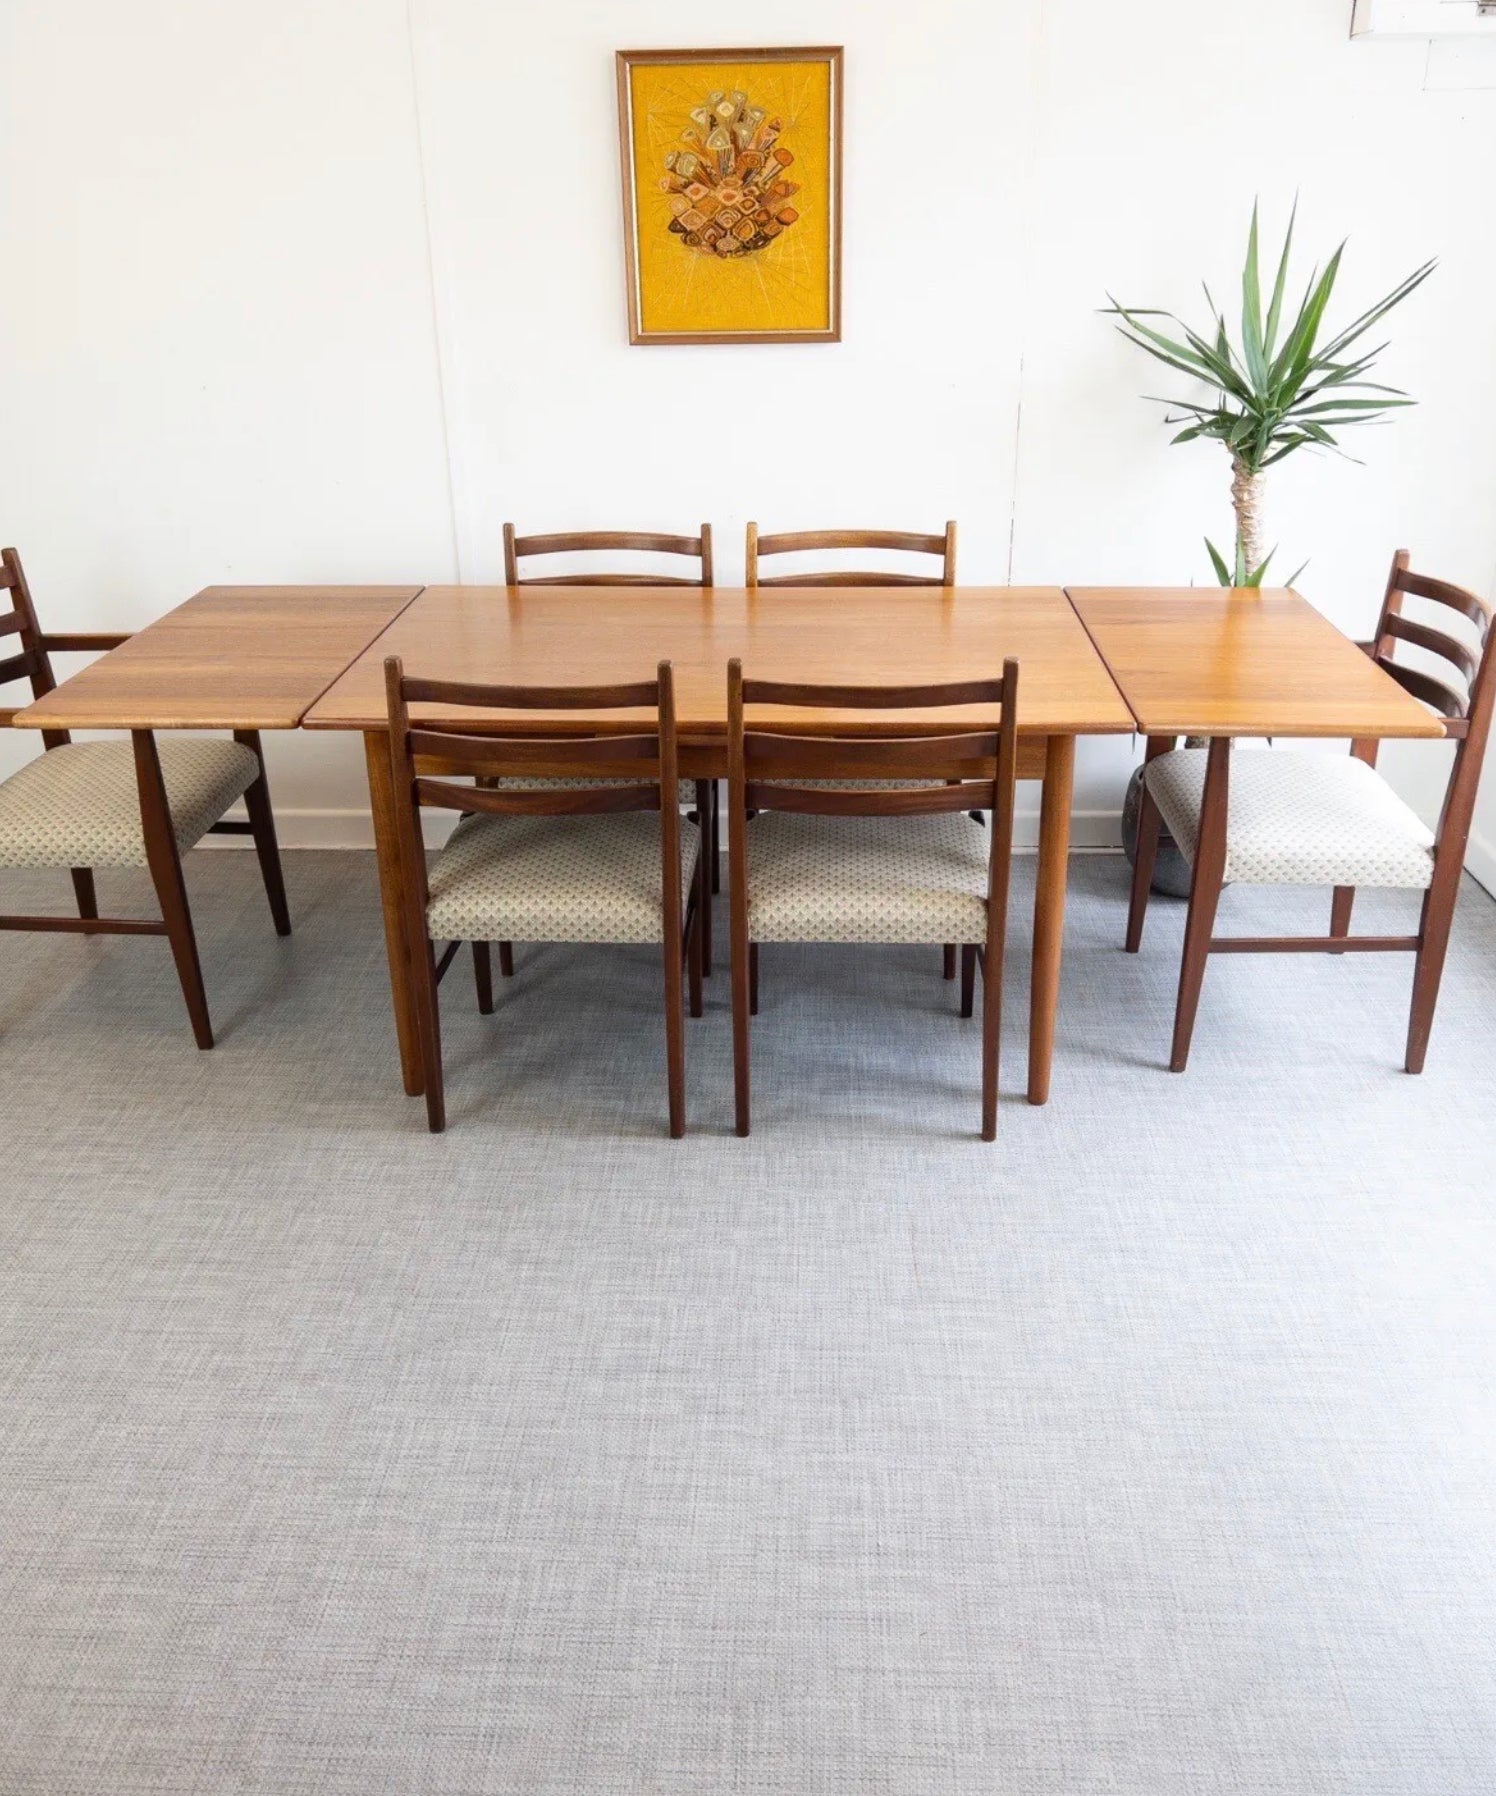 Danish Teak Mid Century Dining Table from A M Mobler in Denmark - teakyfinders